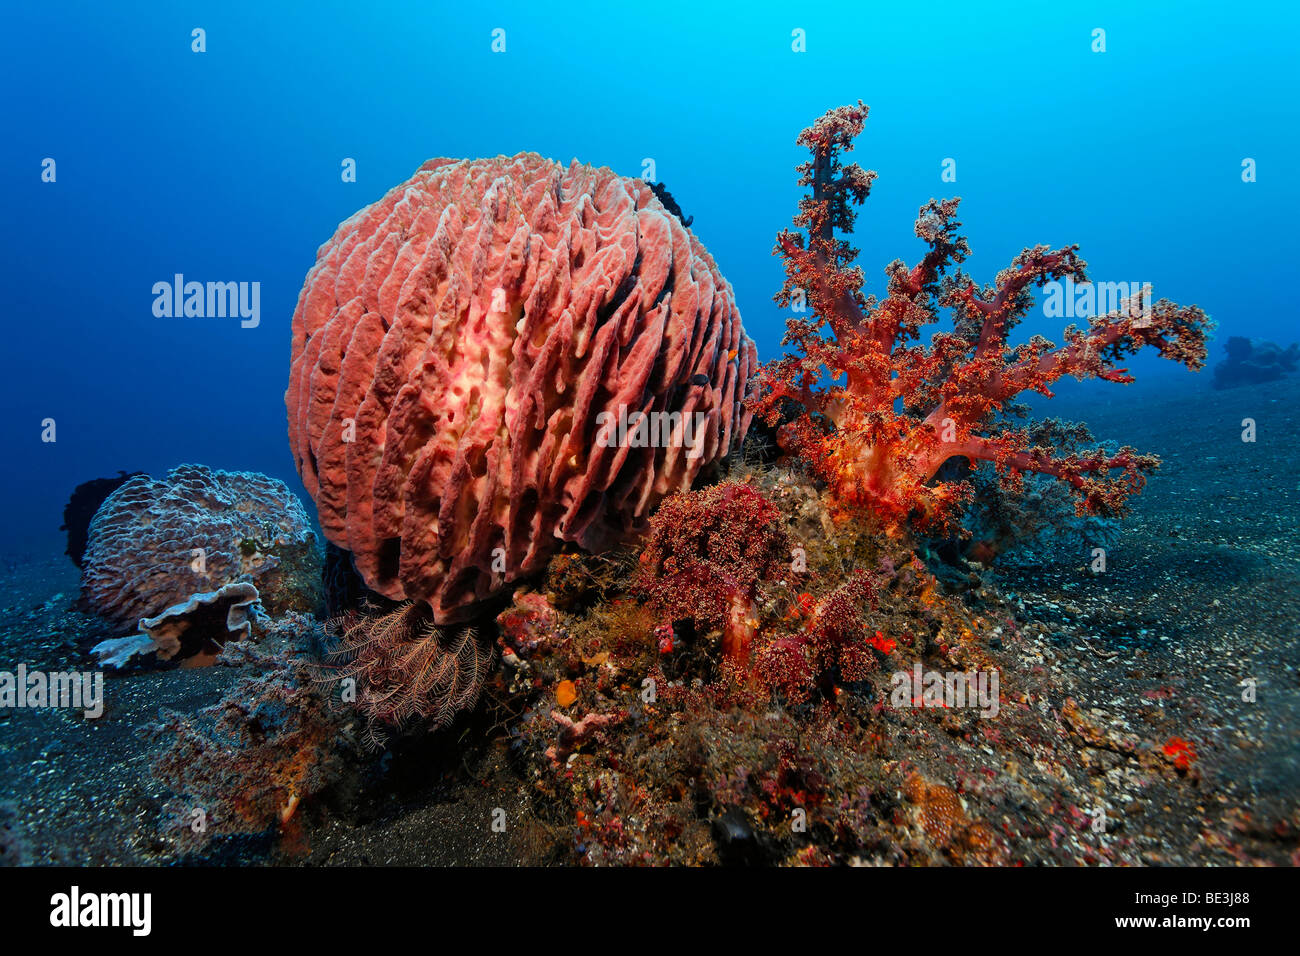 Patch reef with Giant barrel sponge (Xestospongia testudinaria), soft coral (Nephtheidae sp.) und feather stars (Cinoidea), Kud Stock Photo